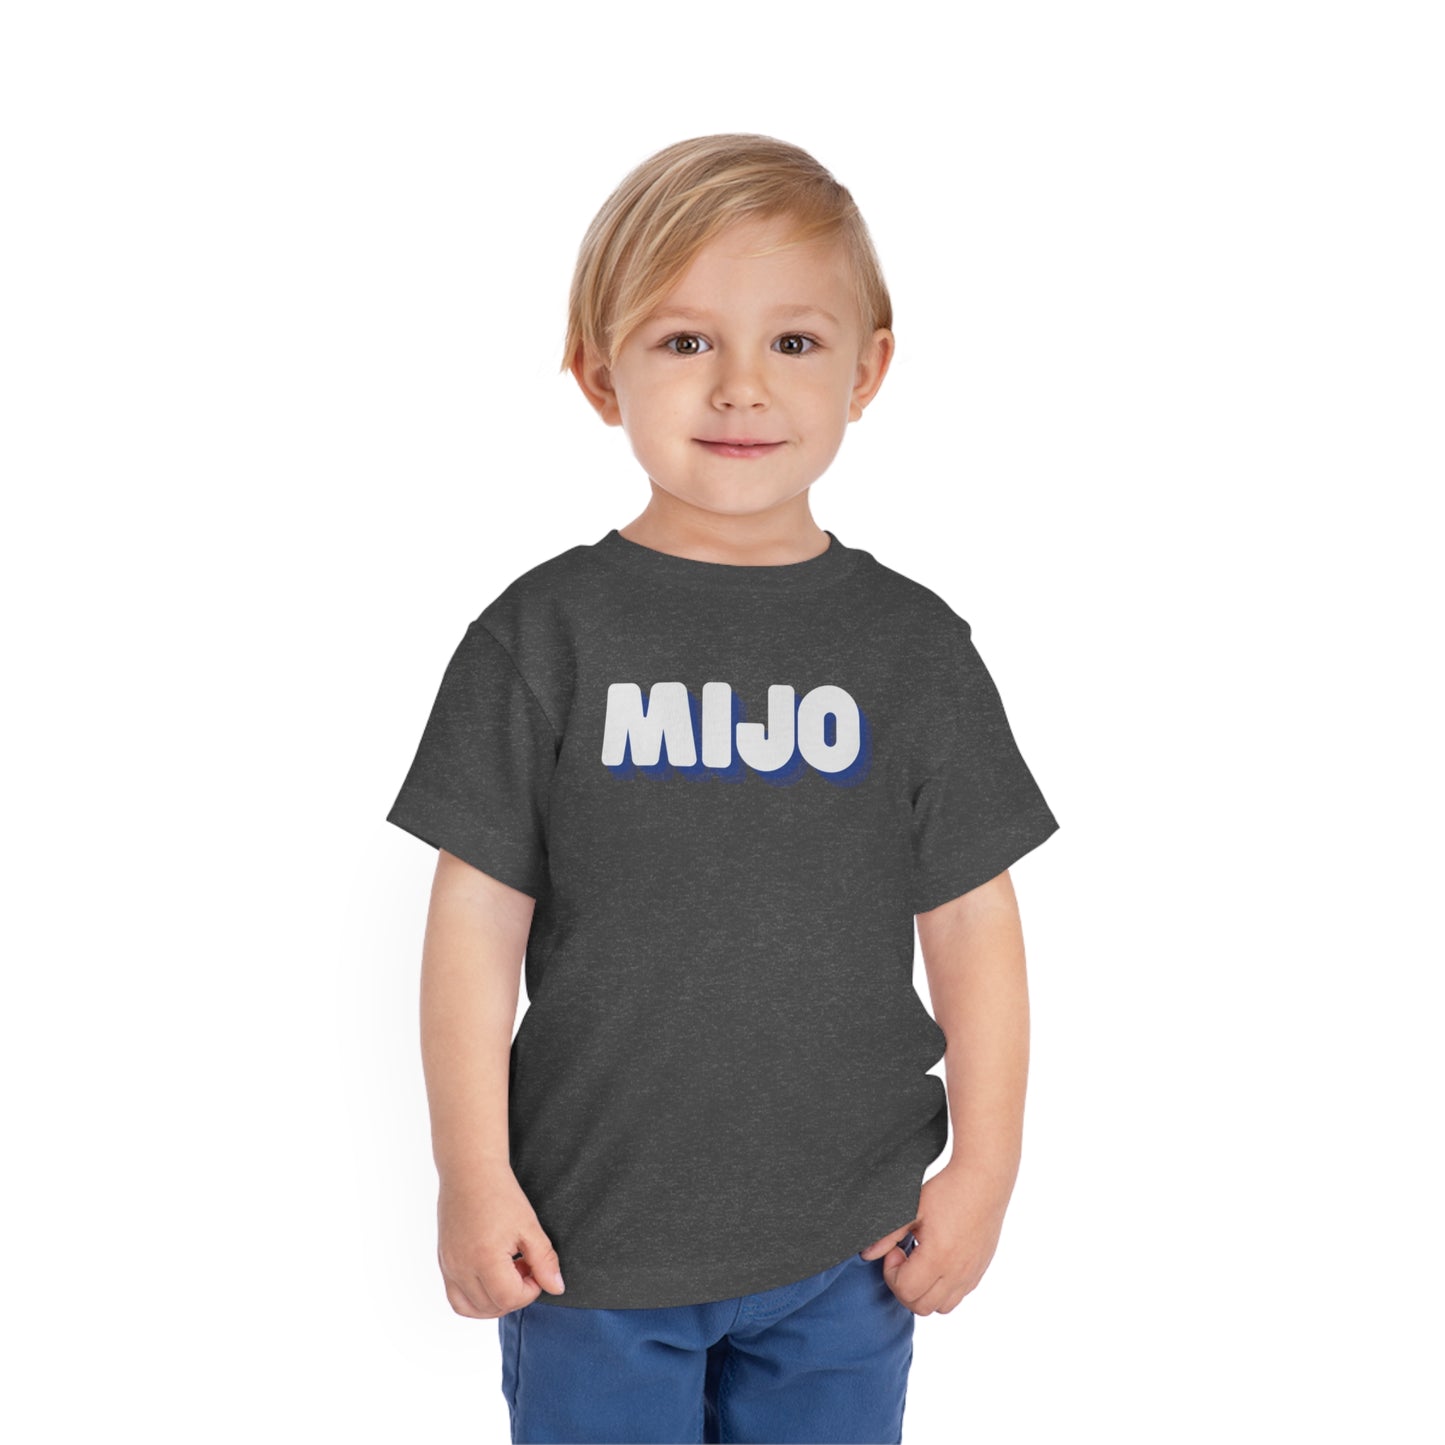 MIJO (son) Toddler Short Sleeve Tee